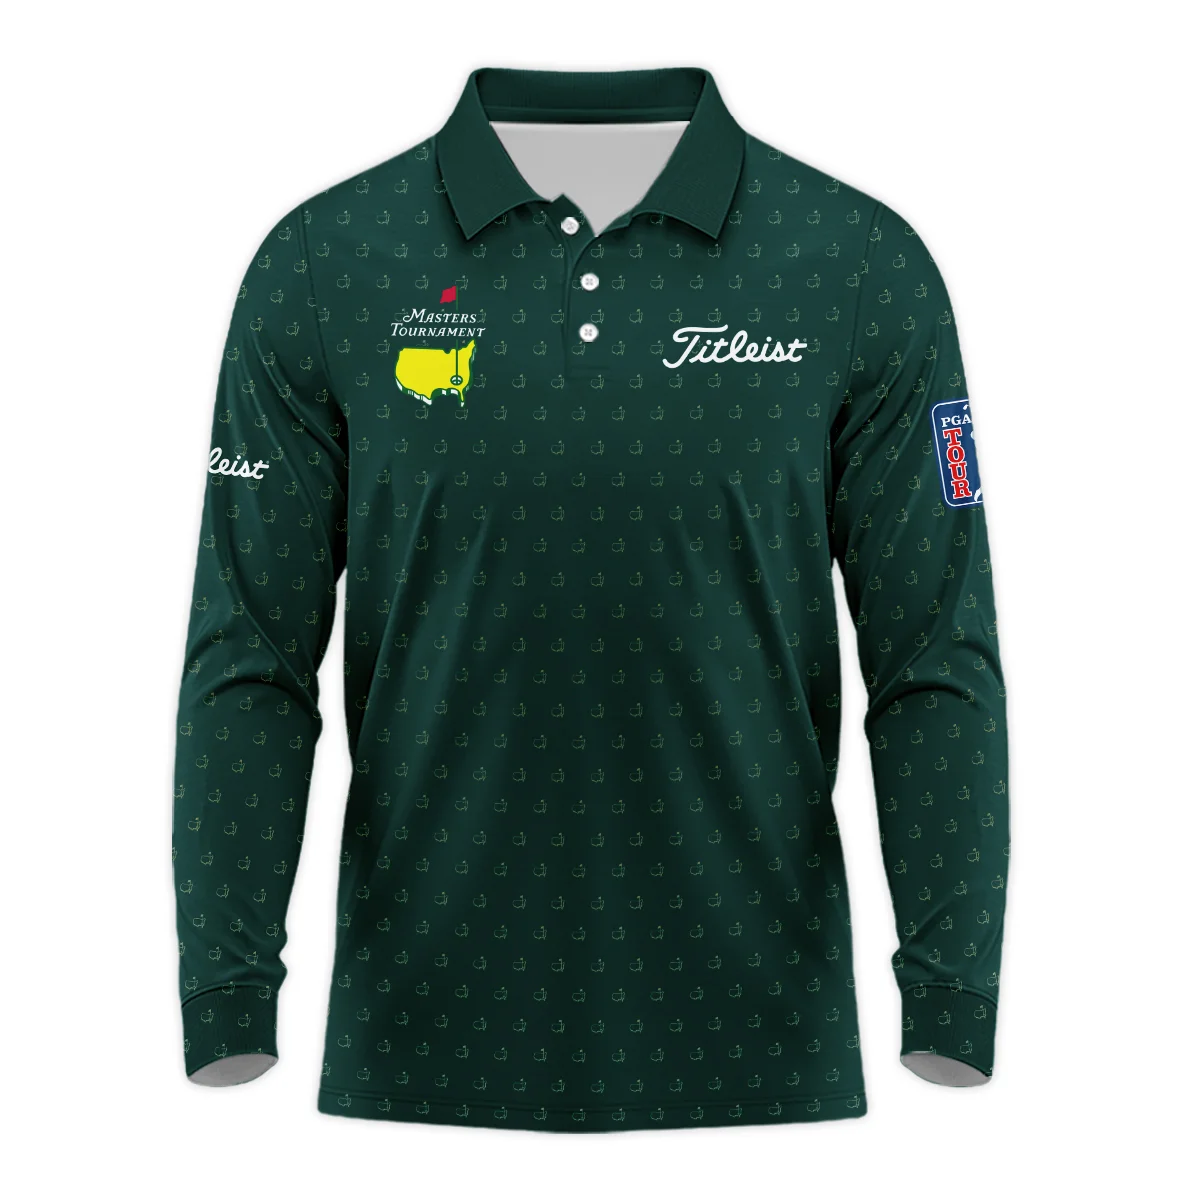 Golf Masters Tournament Titleist Bomber Jacket Logo Pattern Gold Green Golf Sports All Over Print Bomber Jacket